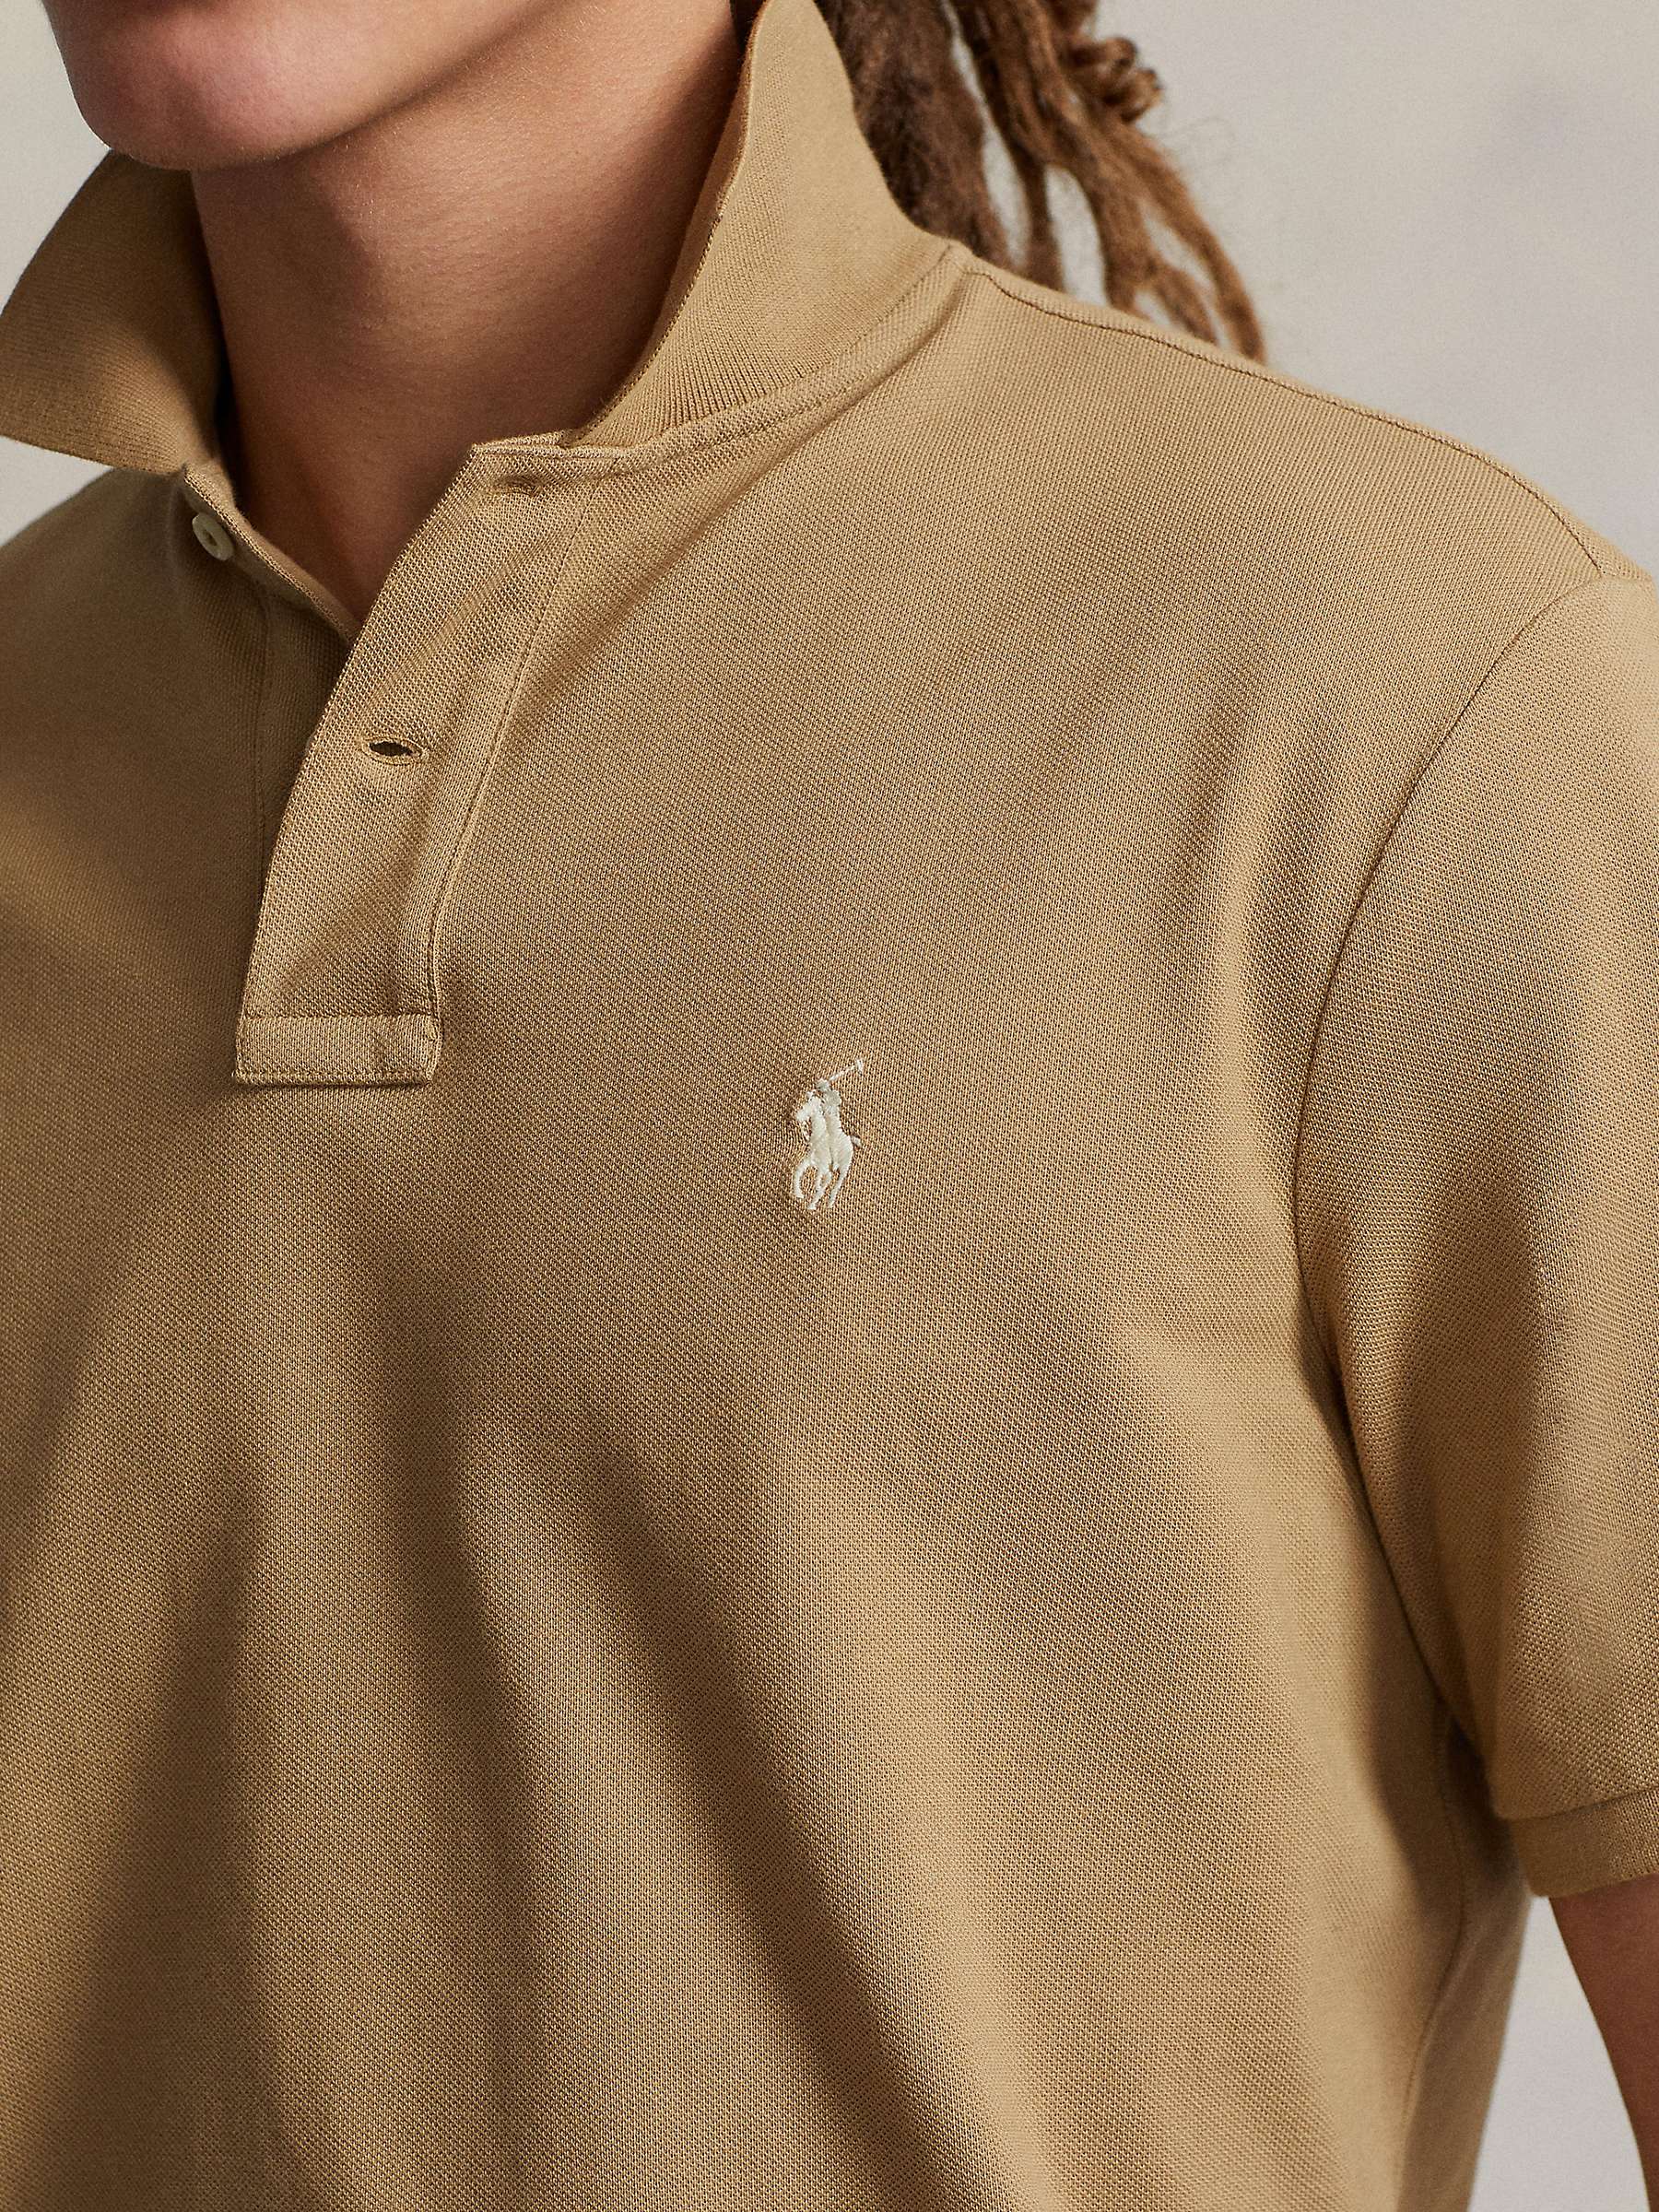 Buy Polo Ralph Lauren Cotton Mesh Short Sleeve Polo Top Online at johnlewis.com